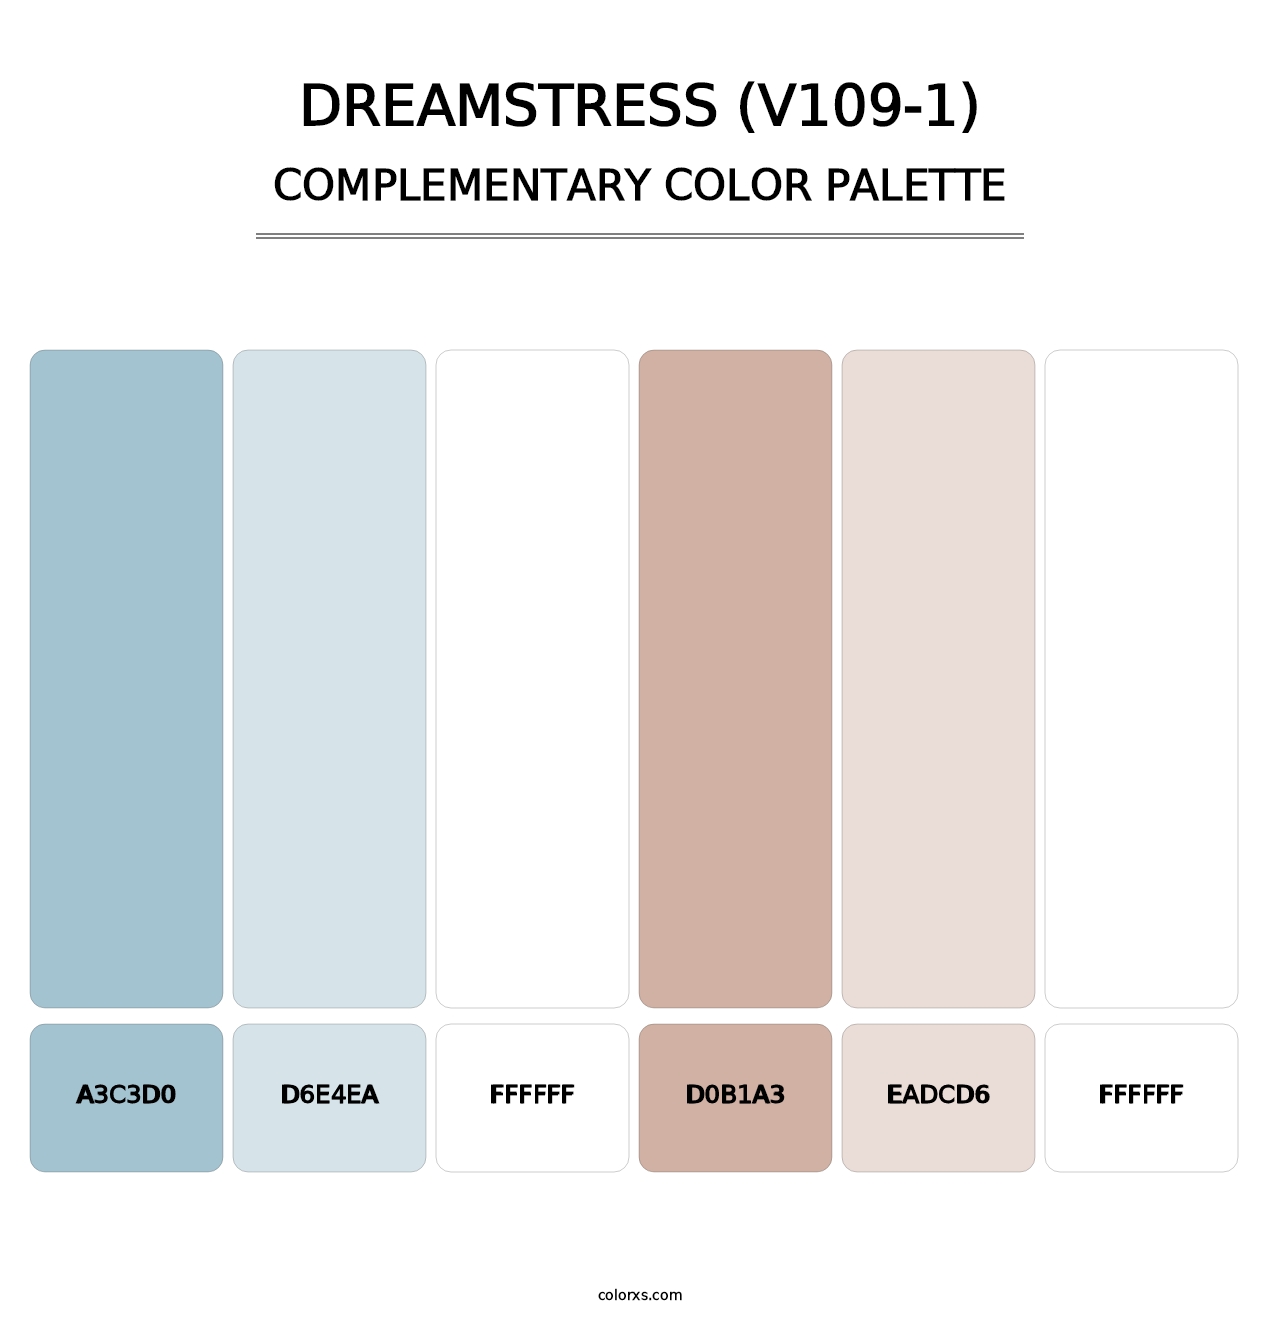 Dreamstress (V109-1) - Complementary Color Palette